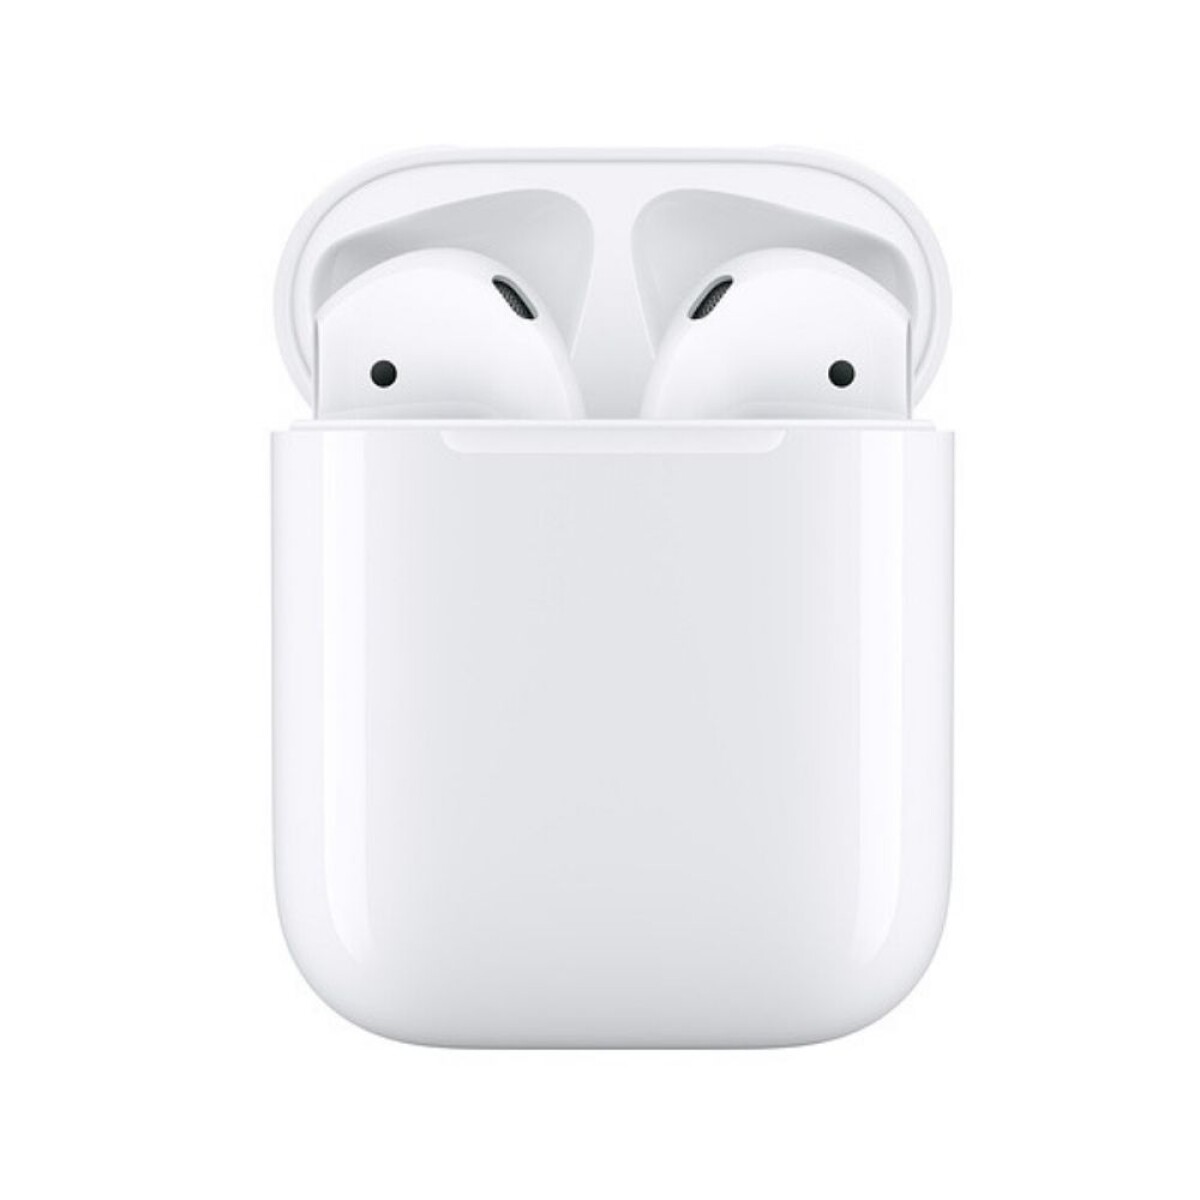 Apple airpods generacion 2 - Blancos 